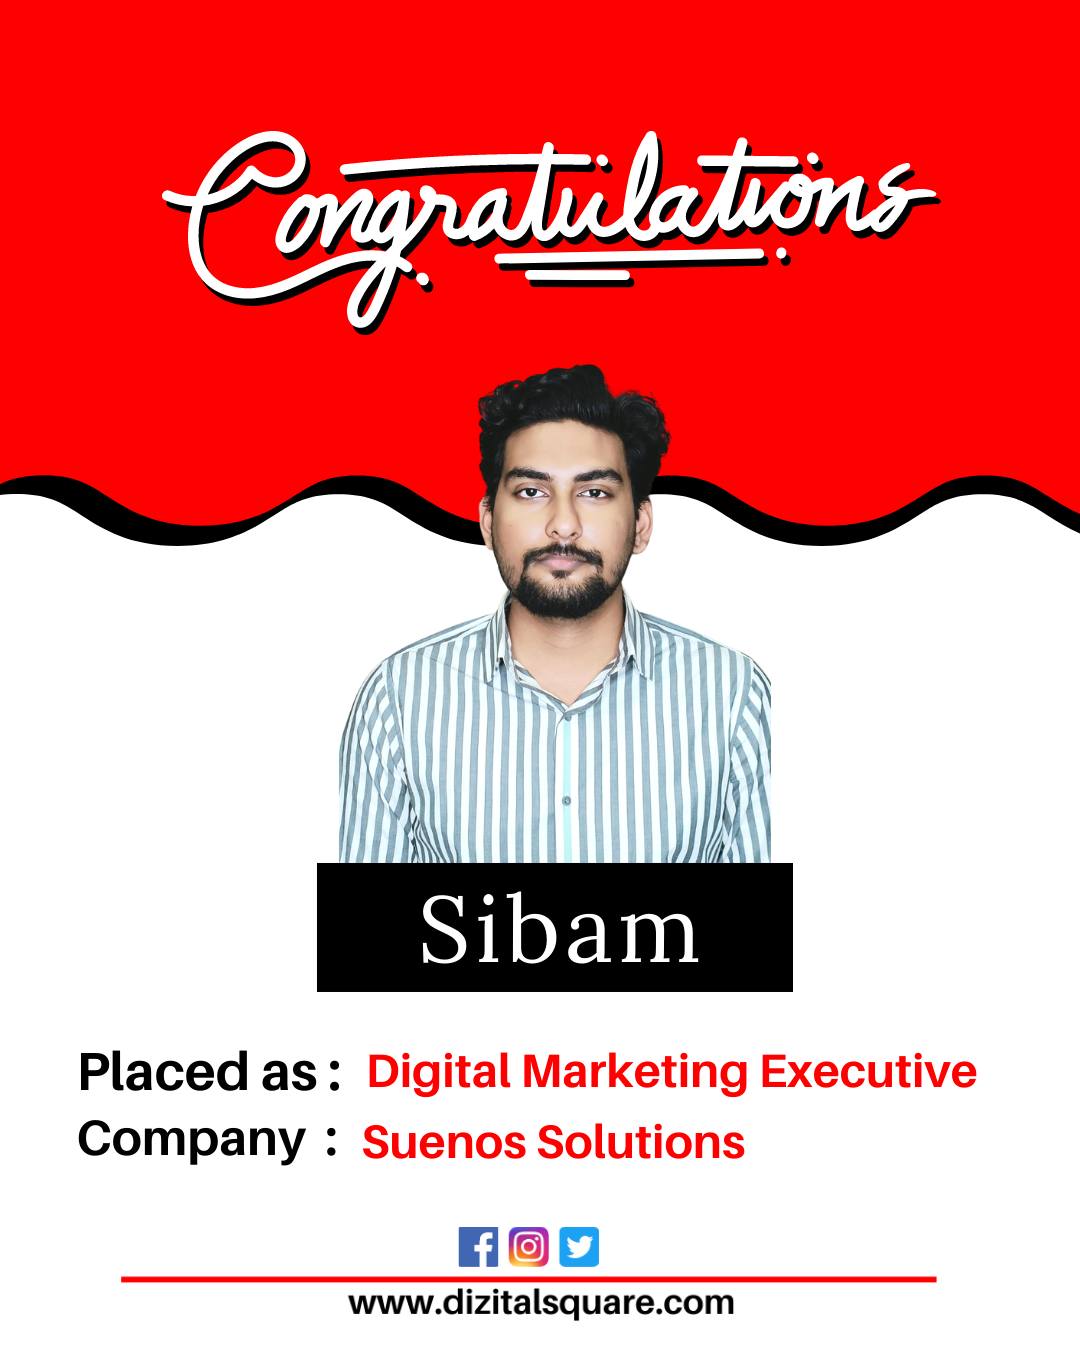 Sibam placed as Digital Marketing Executive